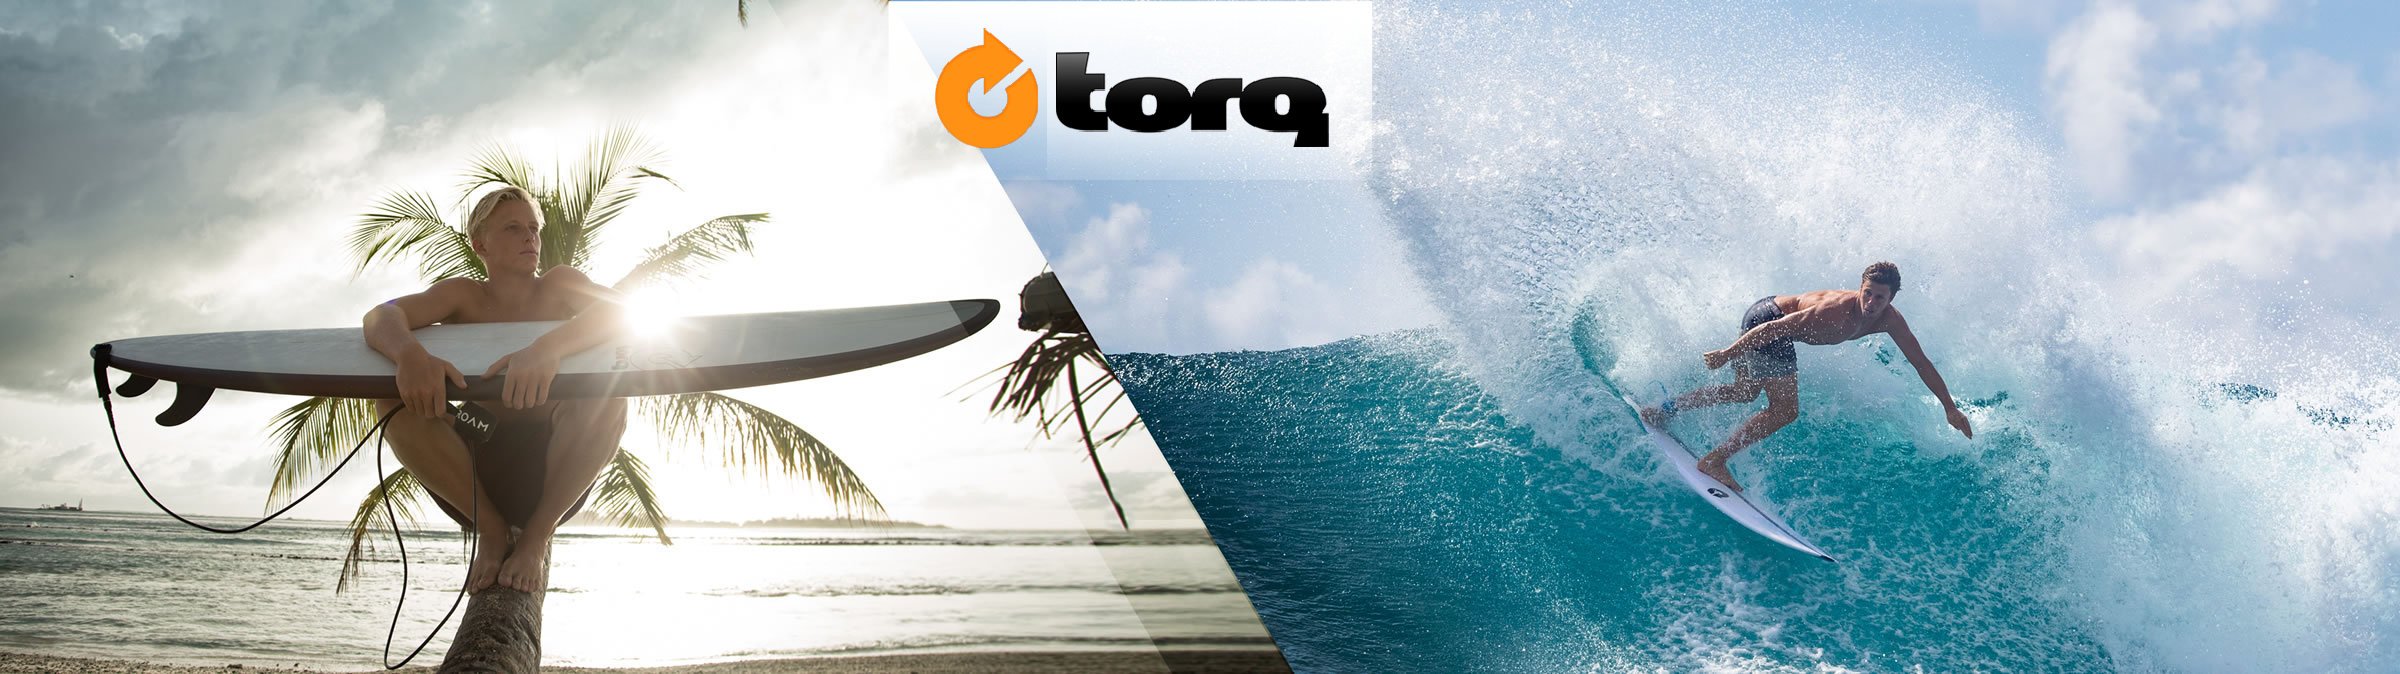 Torq Surfboards brand header